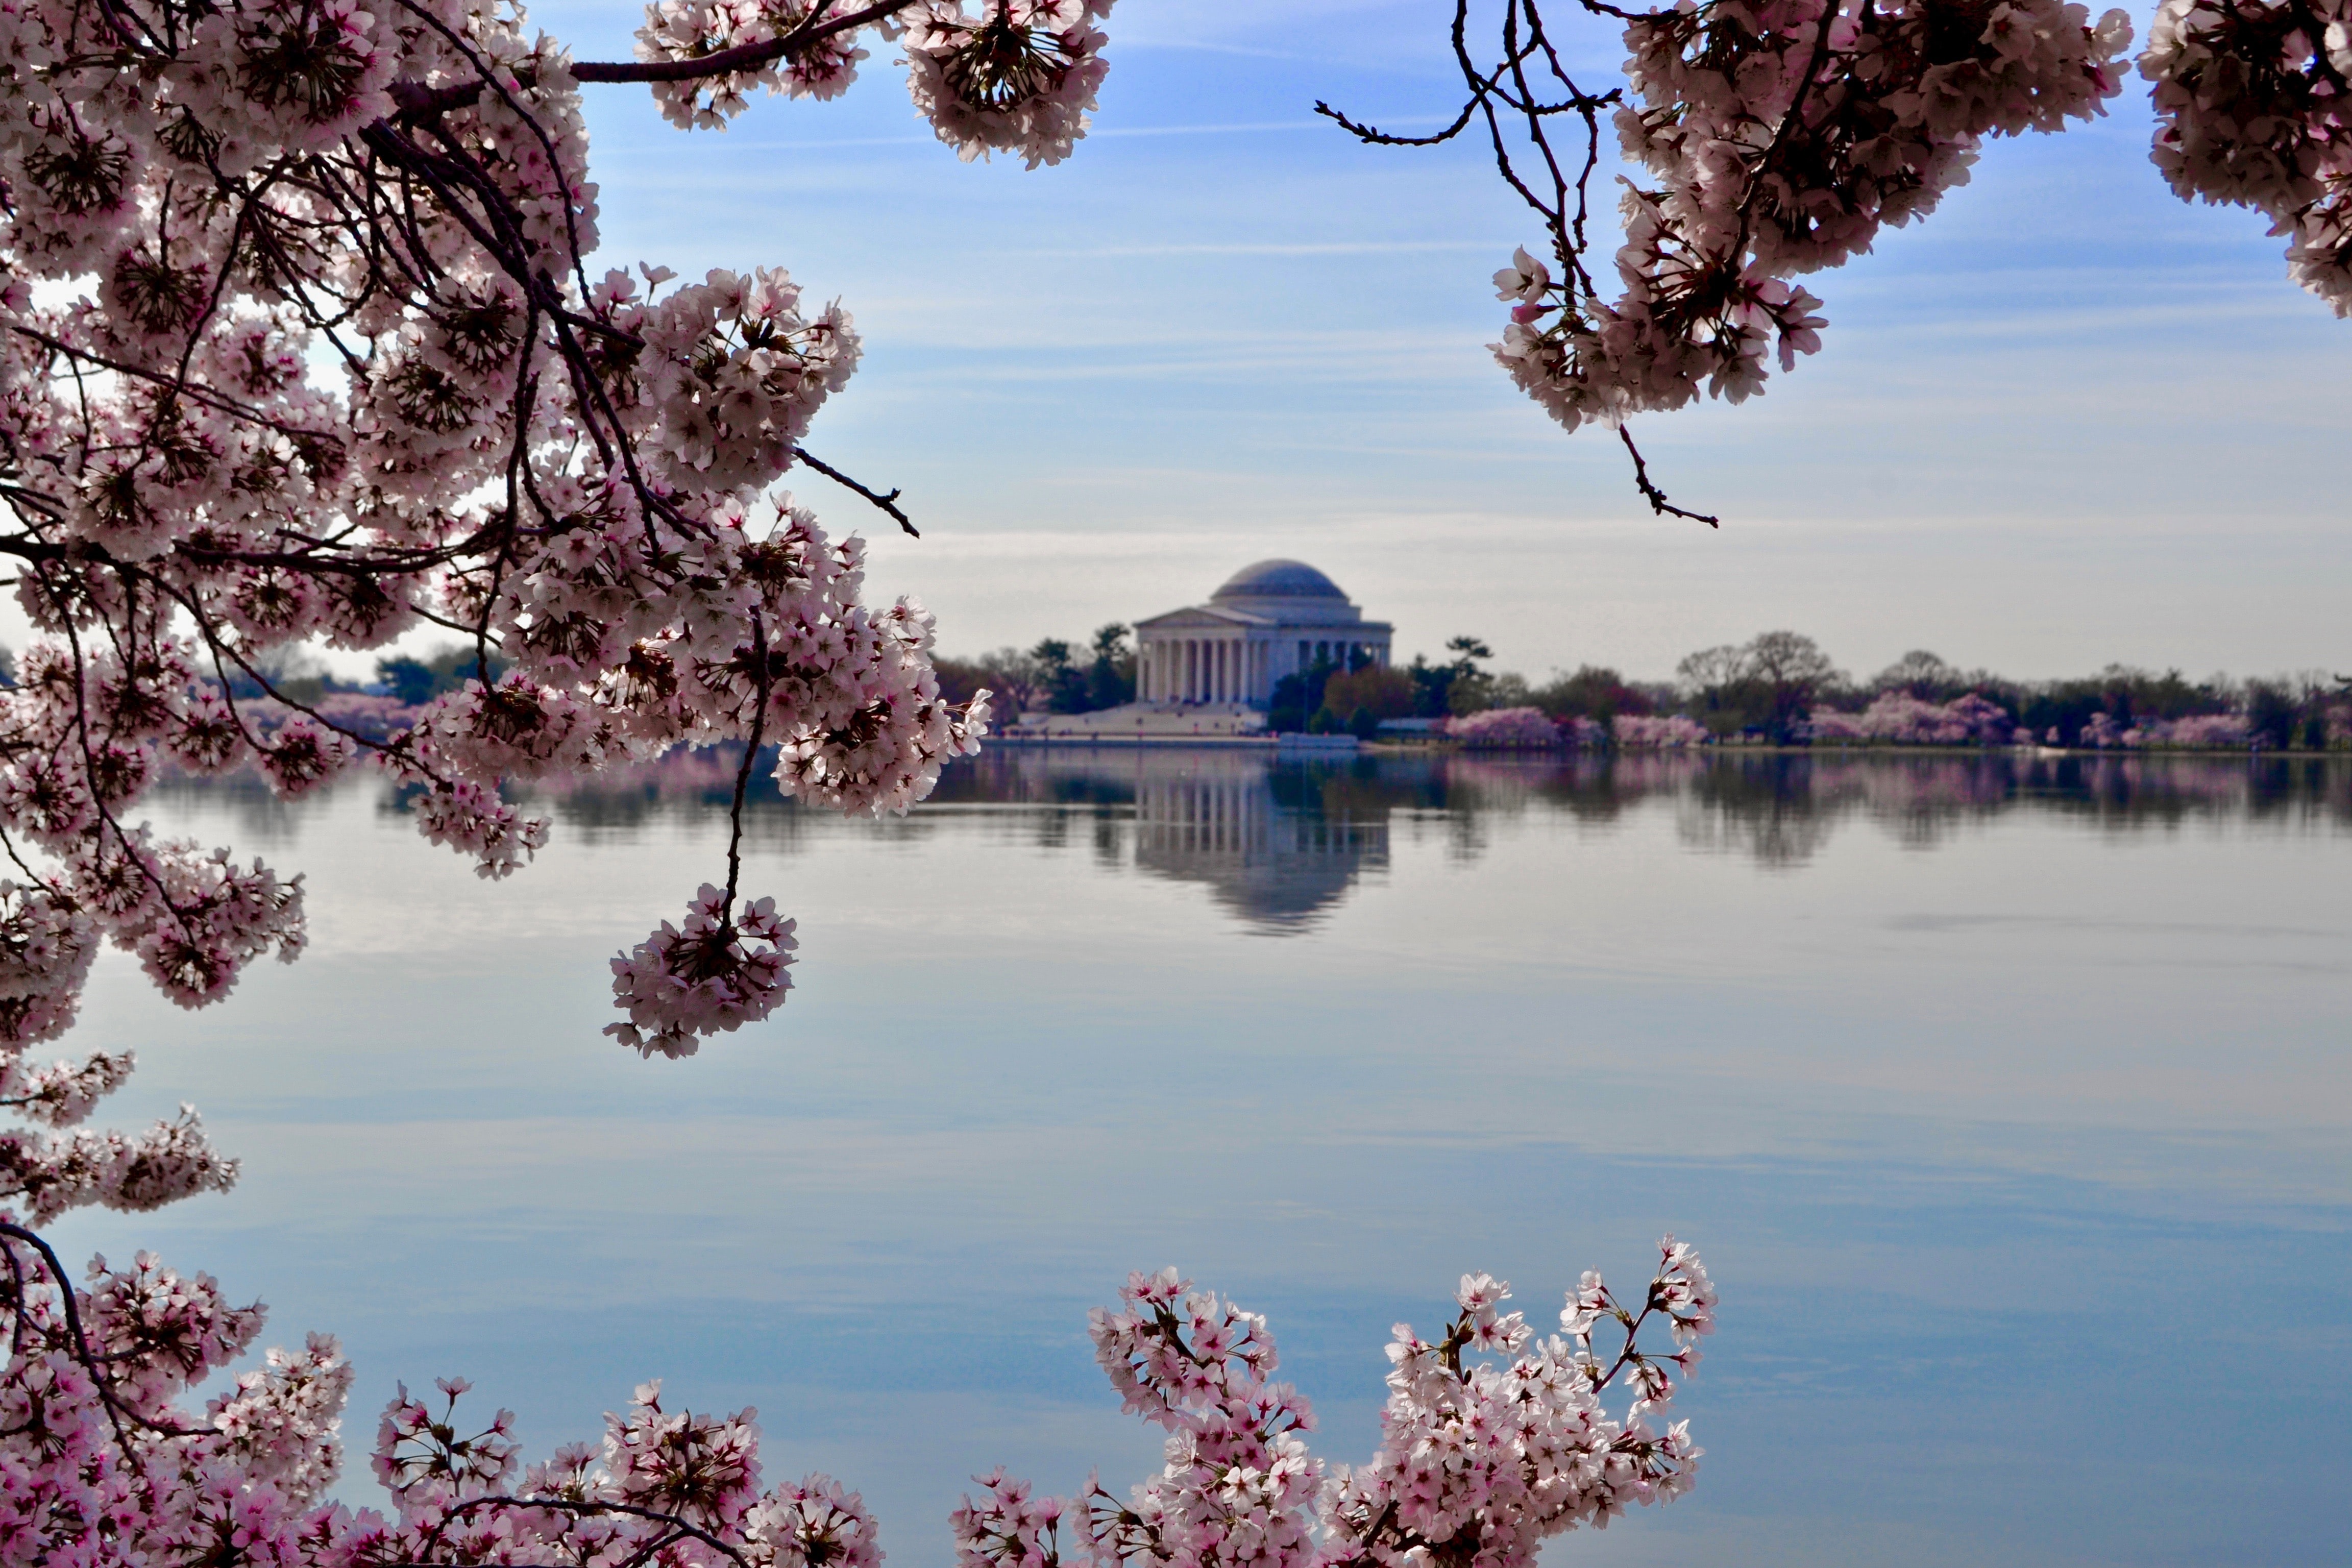 Cherry blossom season in Washington D.C.